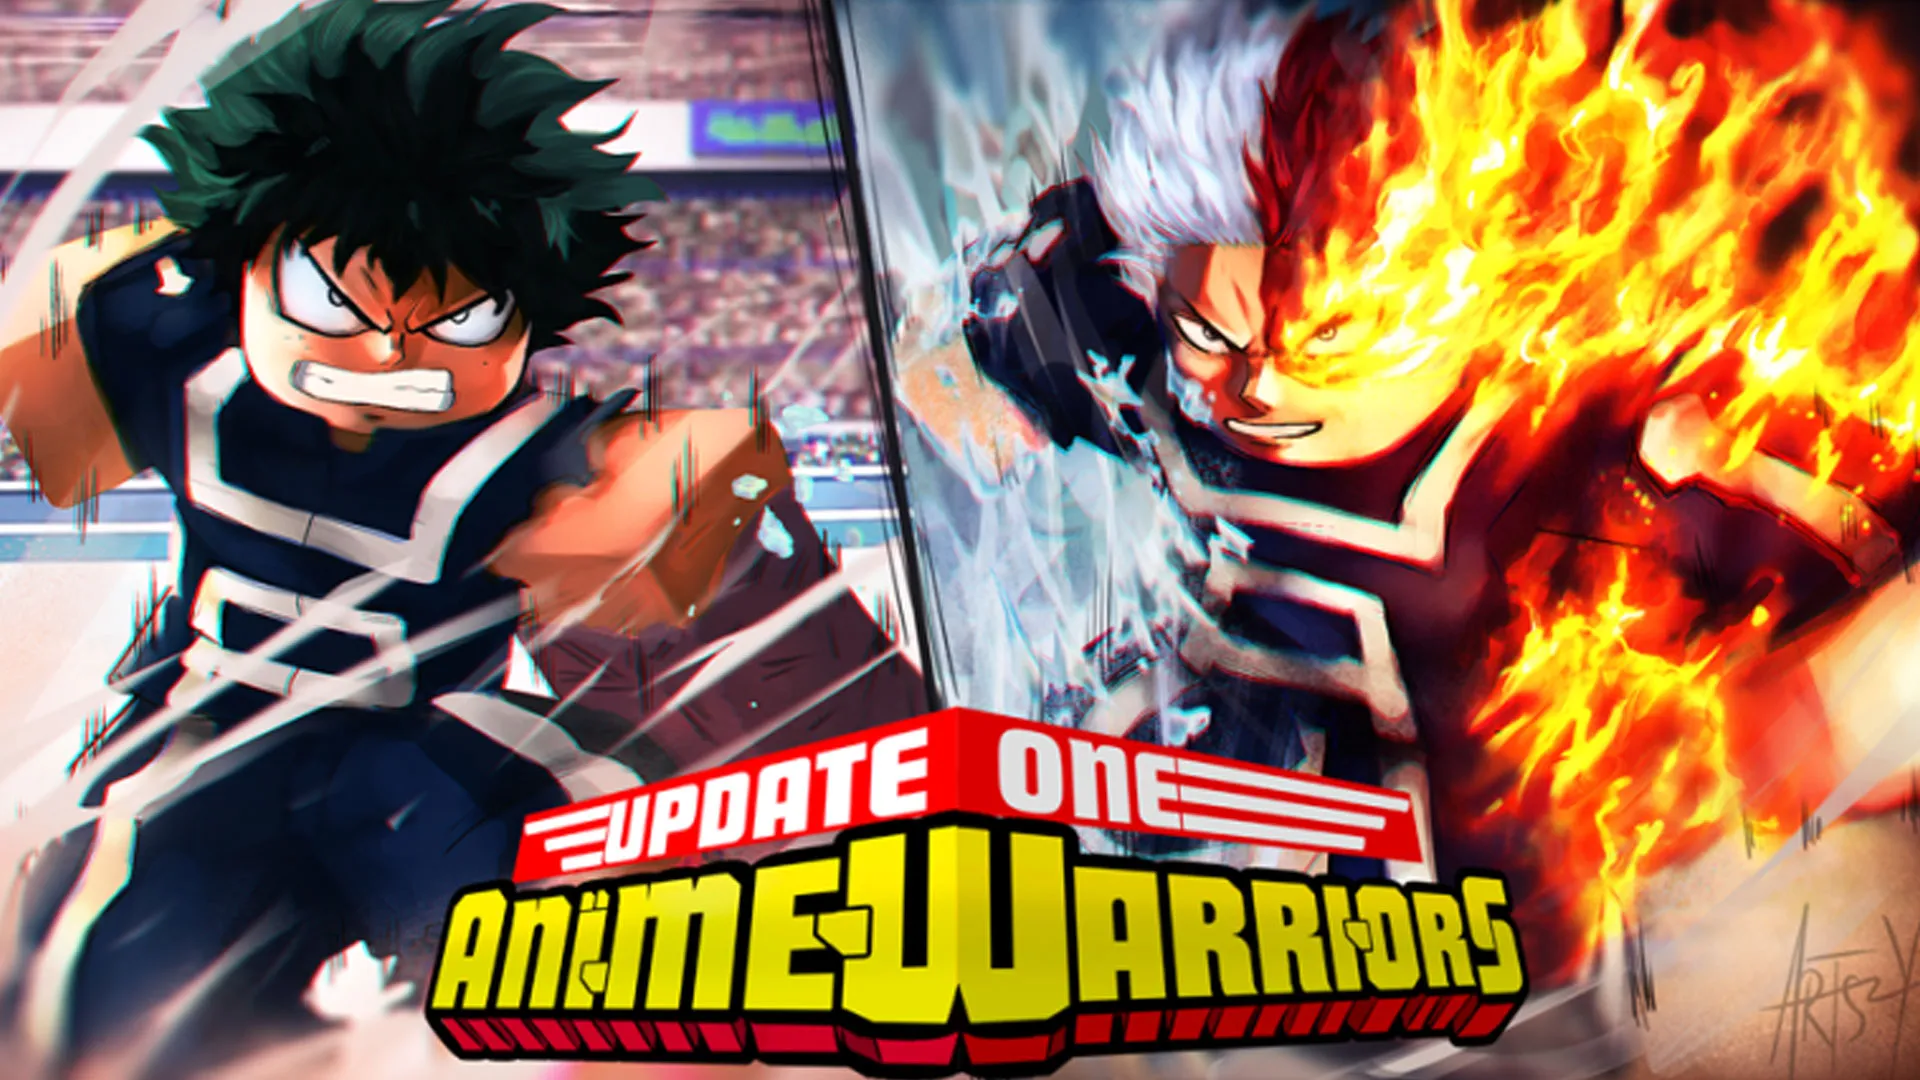 Share 77+ anime warriors 2 discord - awesomeenglish.edu.vn